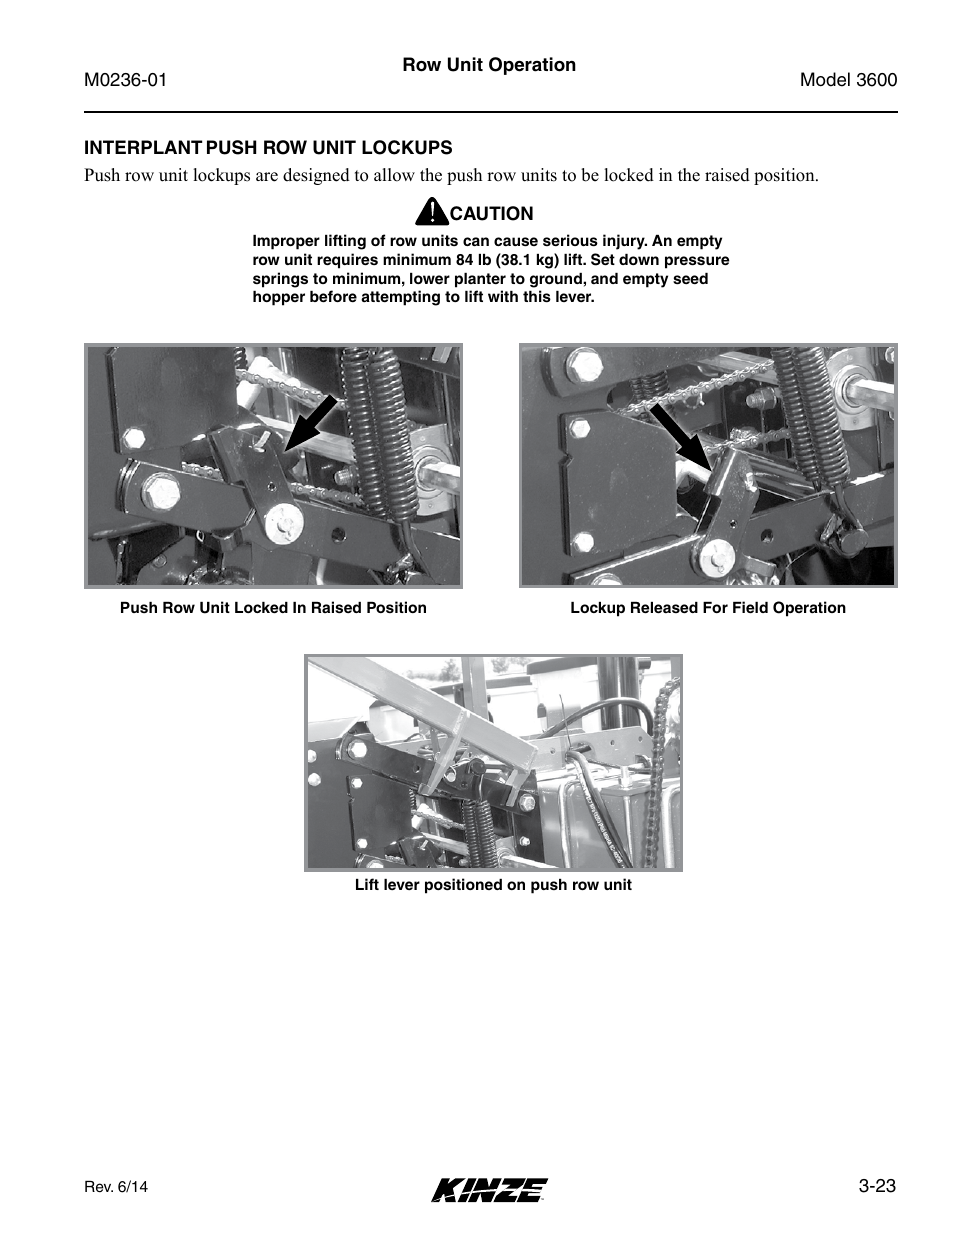 Interplant push row unit lockups, Interplant, Push row unit lockups -23 | Kinze 3600 Lift and Rotate Planter Rev. 7/14 User Manual | Page 67 / 172